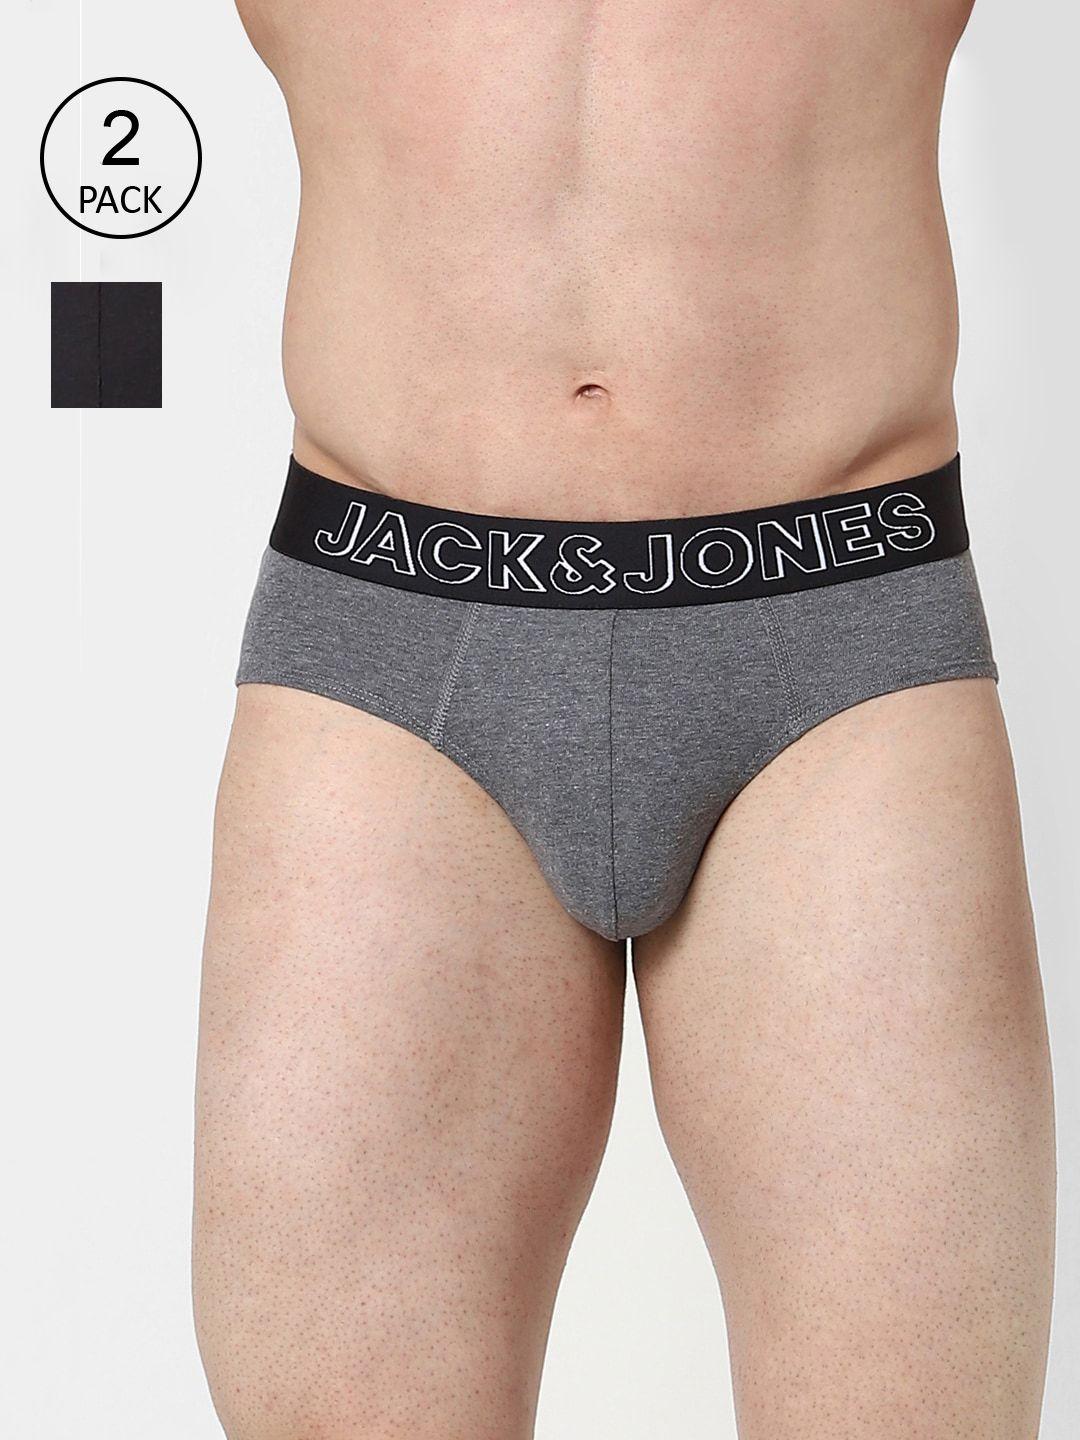 jack-&-jones-men-pack-of-2-solid-cotton-basic-briefs-191604001-2